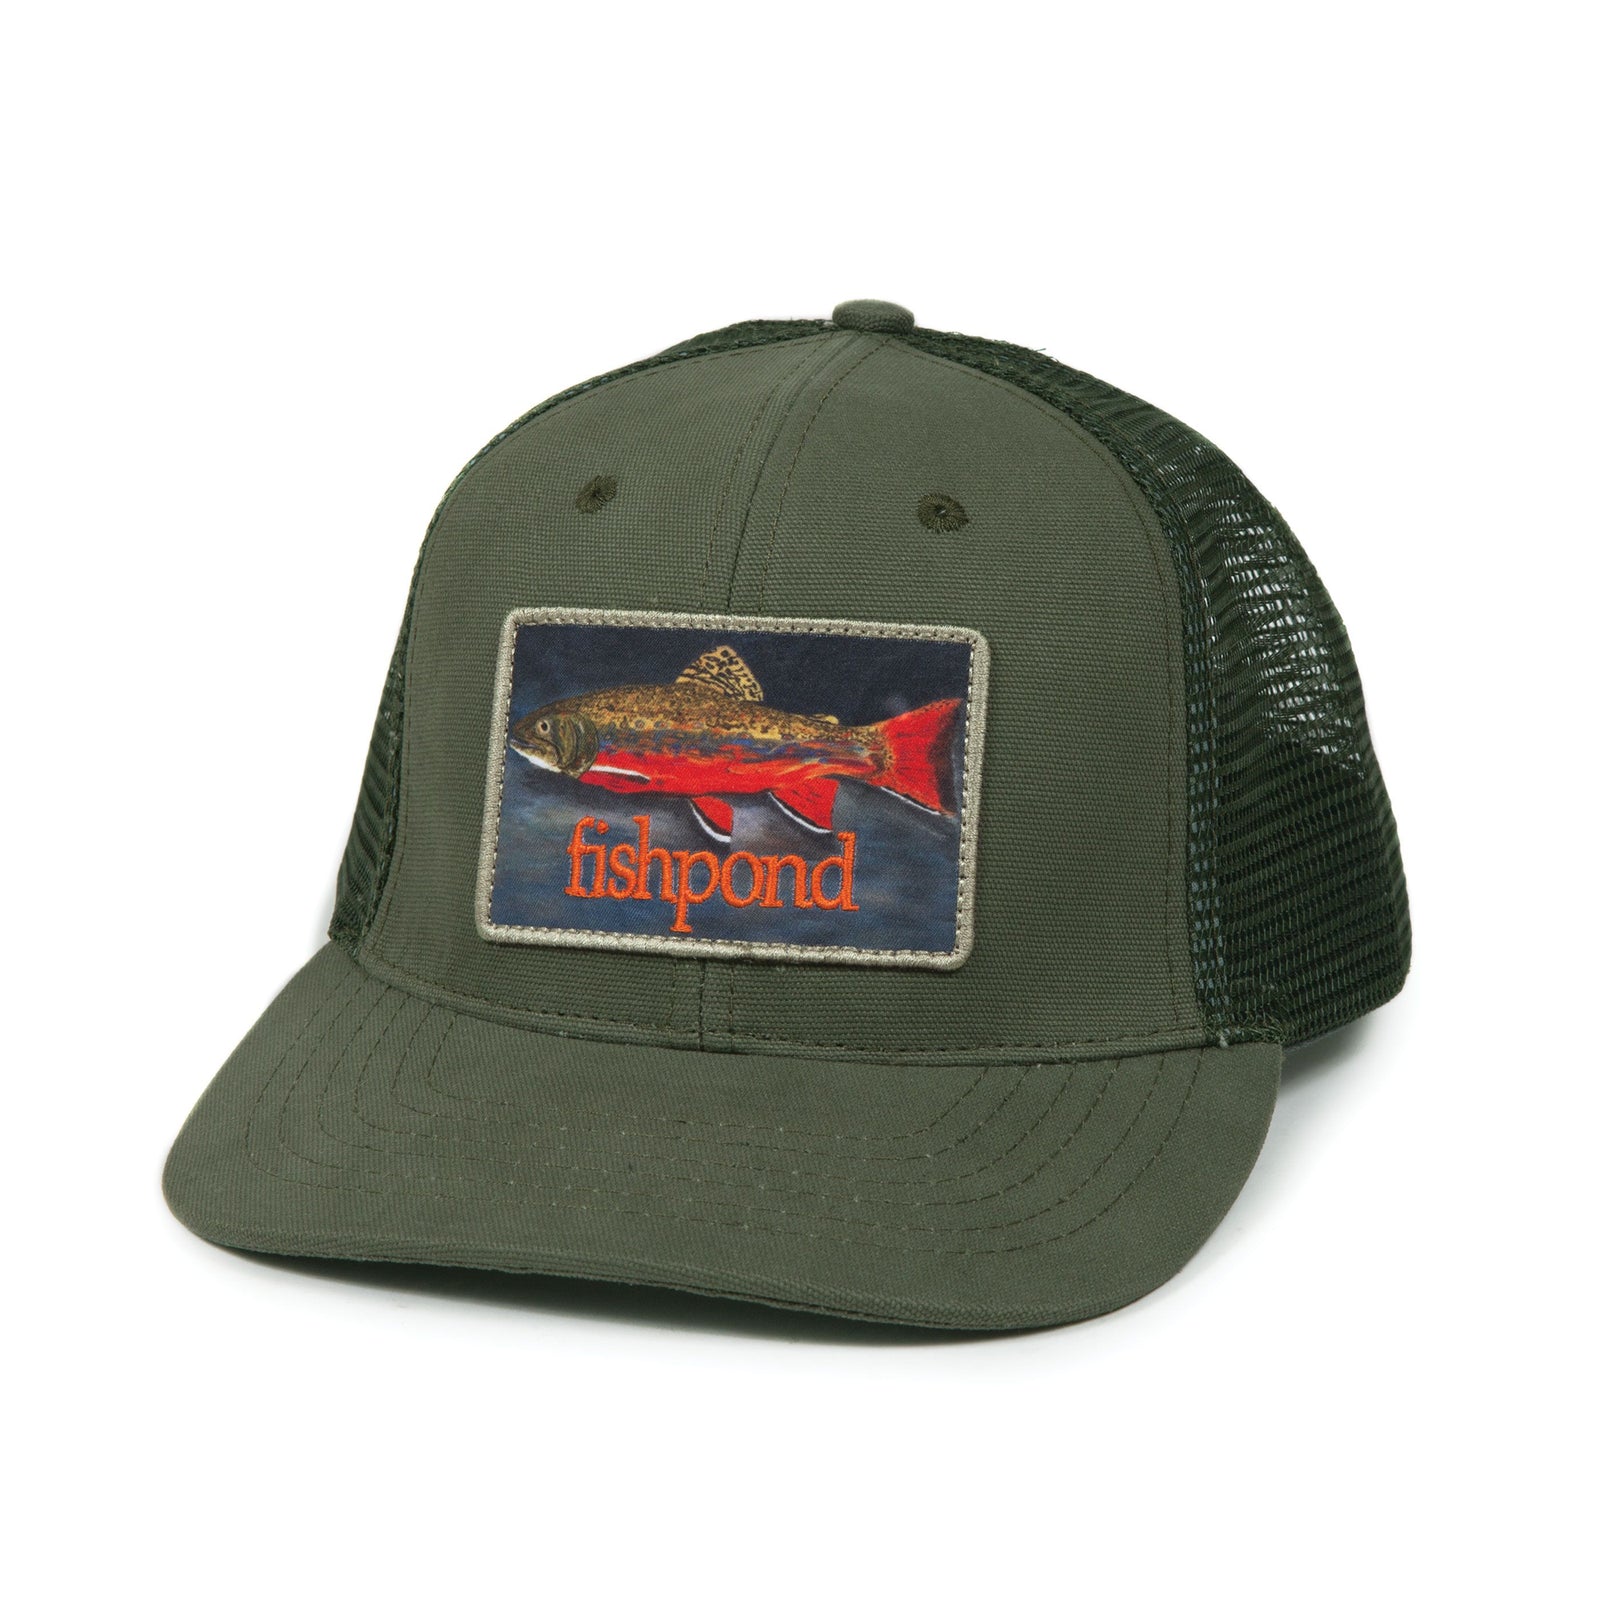 Fishpond Lowcountry, Trucker Hat